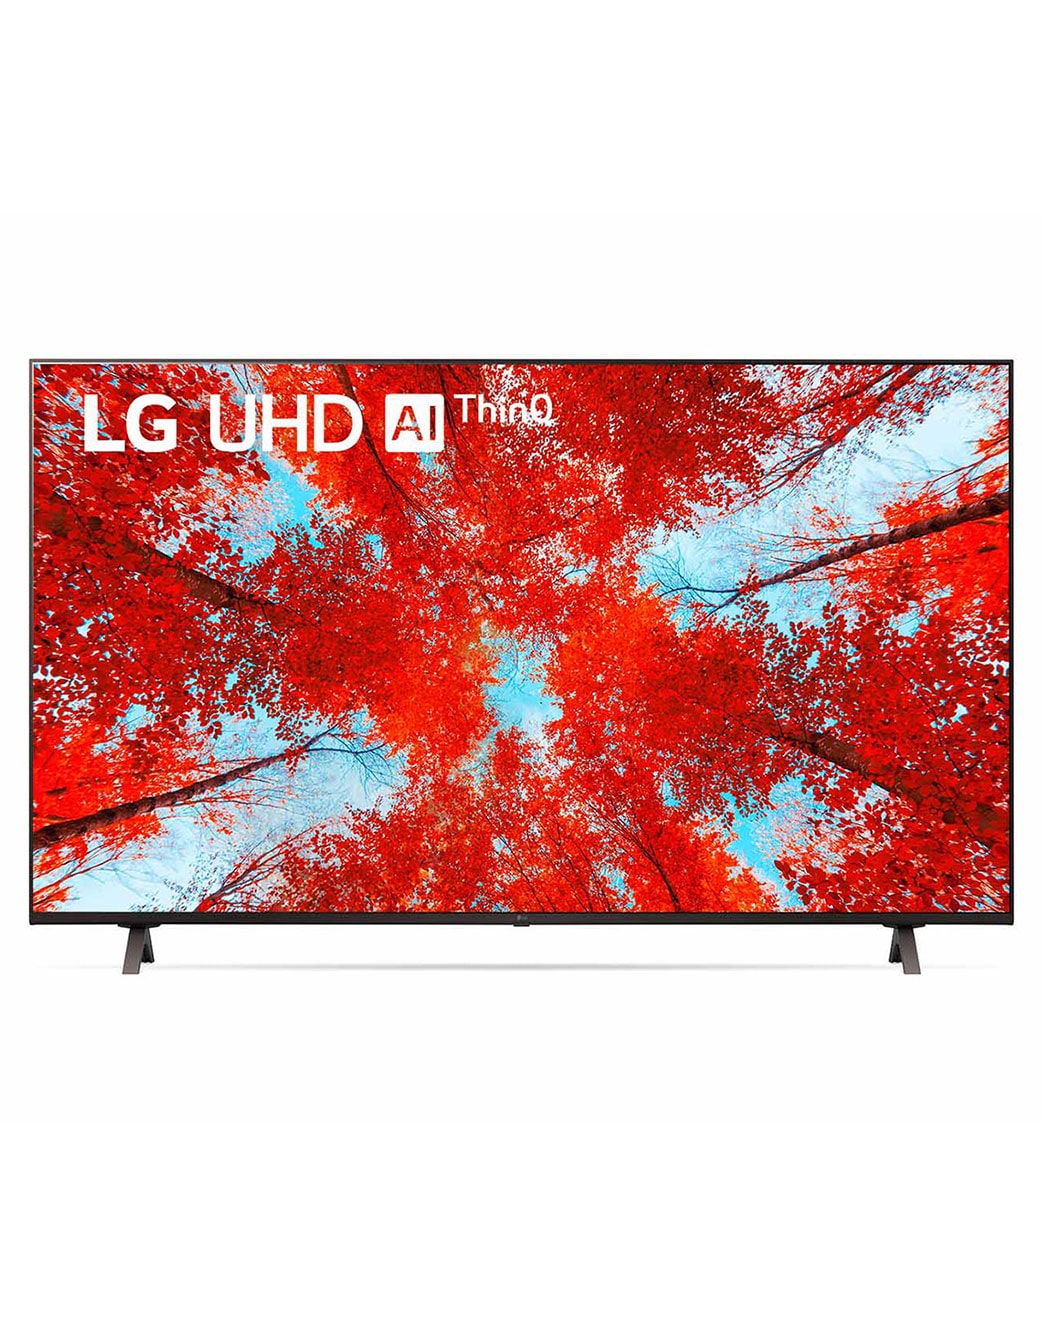 LG 65UM6900 65 4K UHD Smart TV con TruMotion 120 (modelo 2019) - Caja  abierta